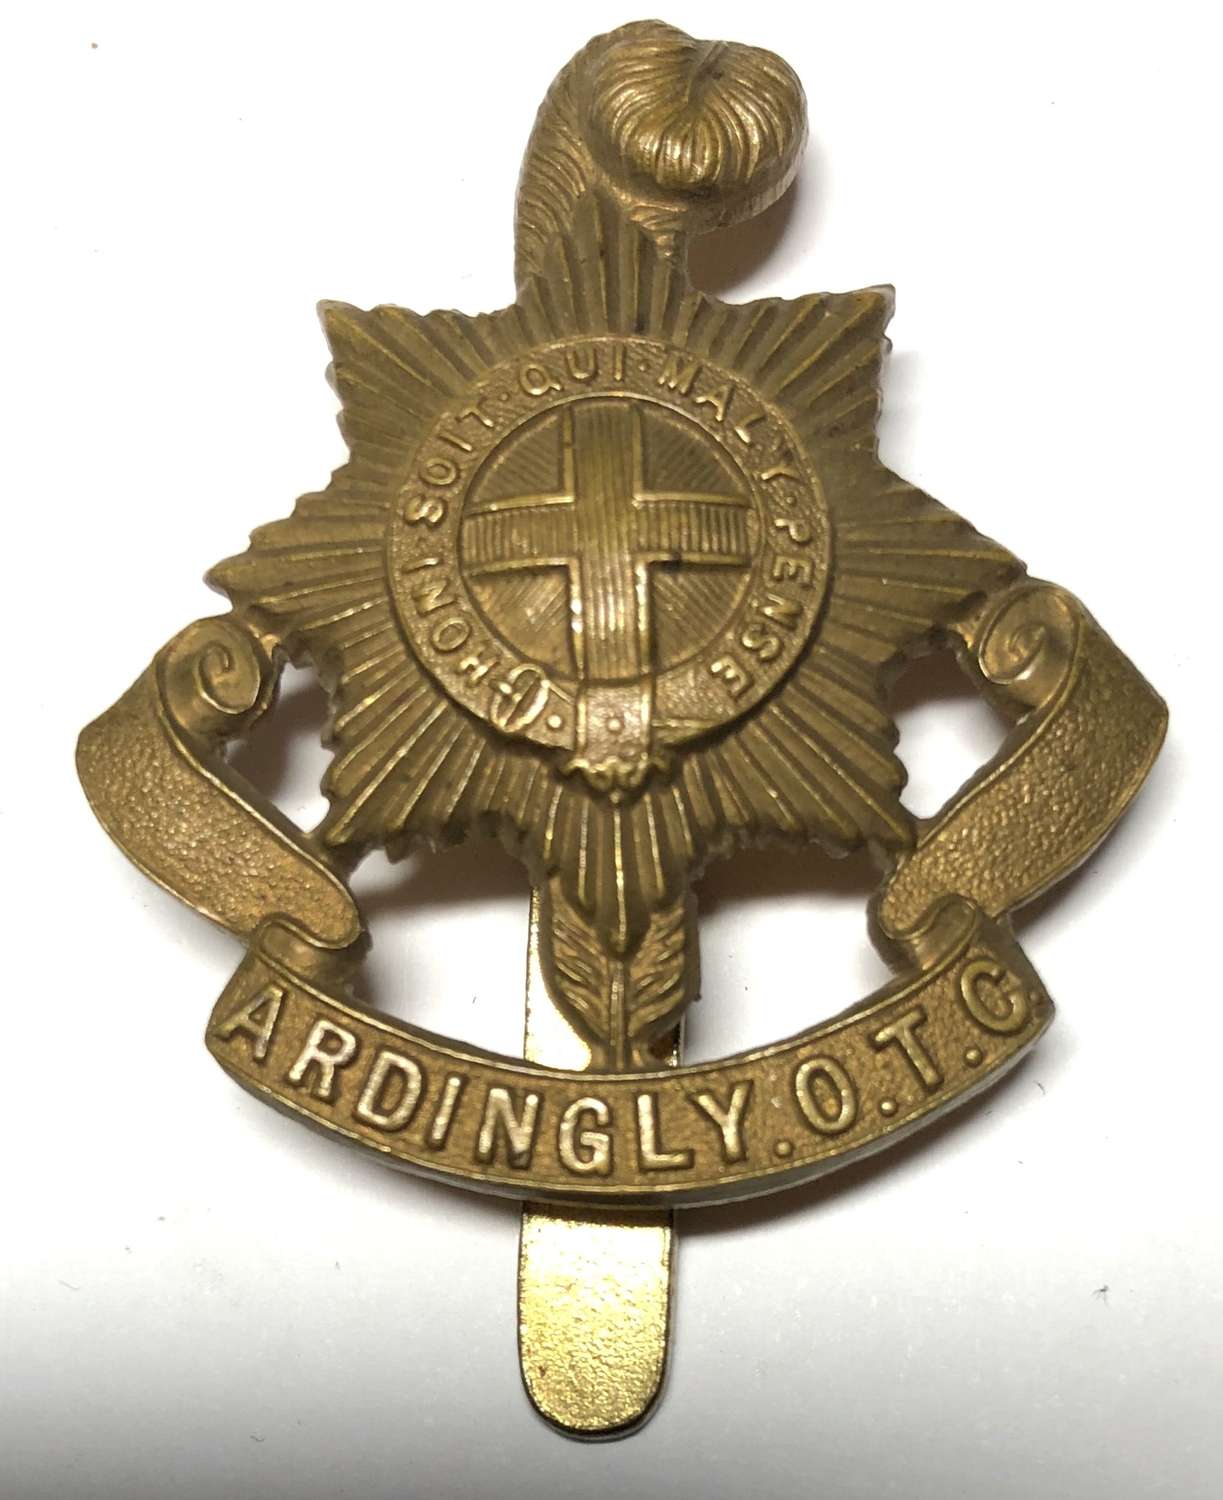 Ardingly College OTC Sussex all brass version cap badge